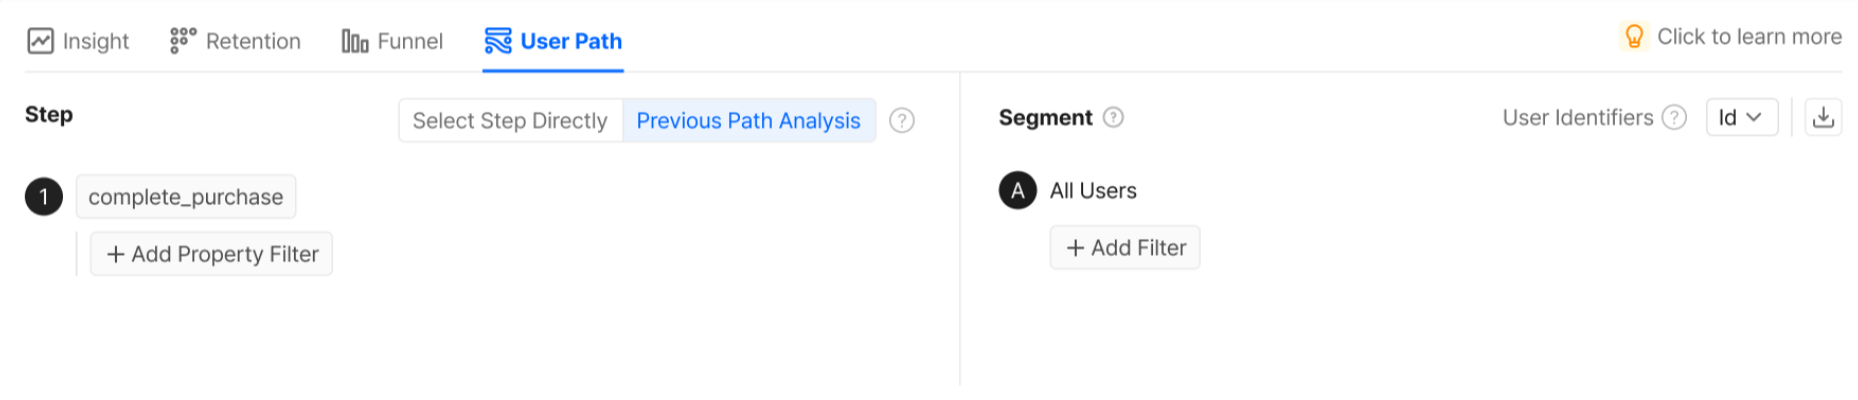 User Path Analytics type